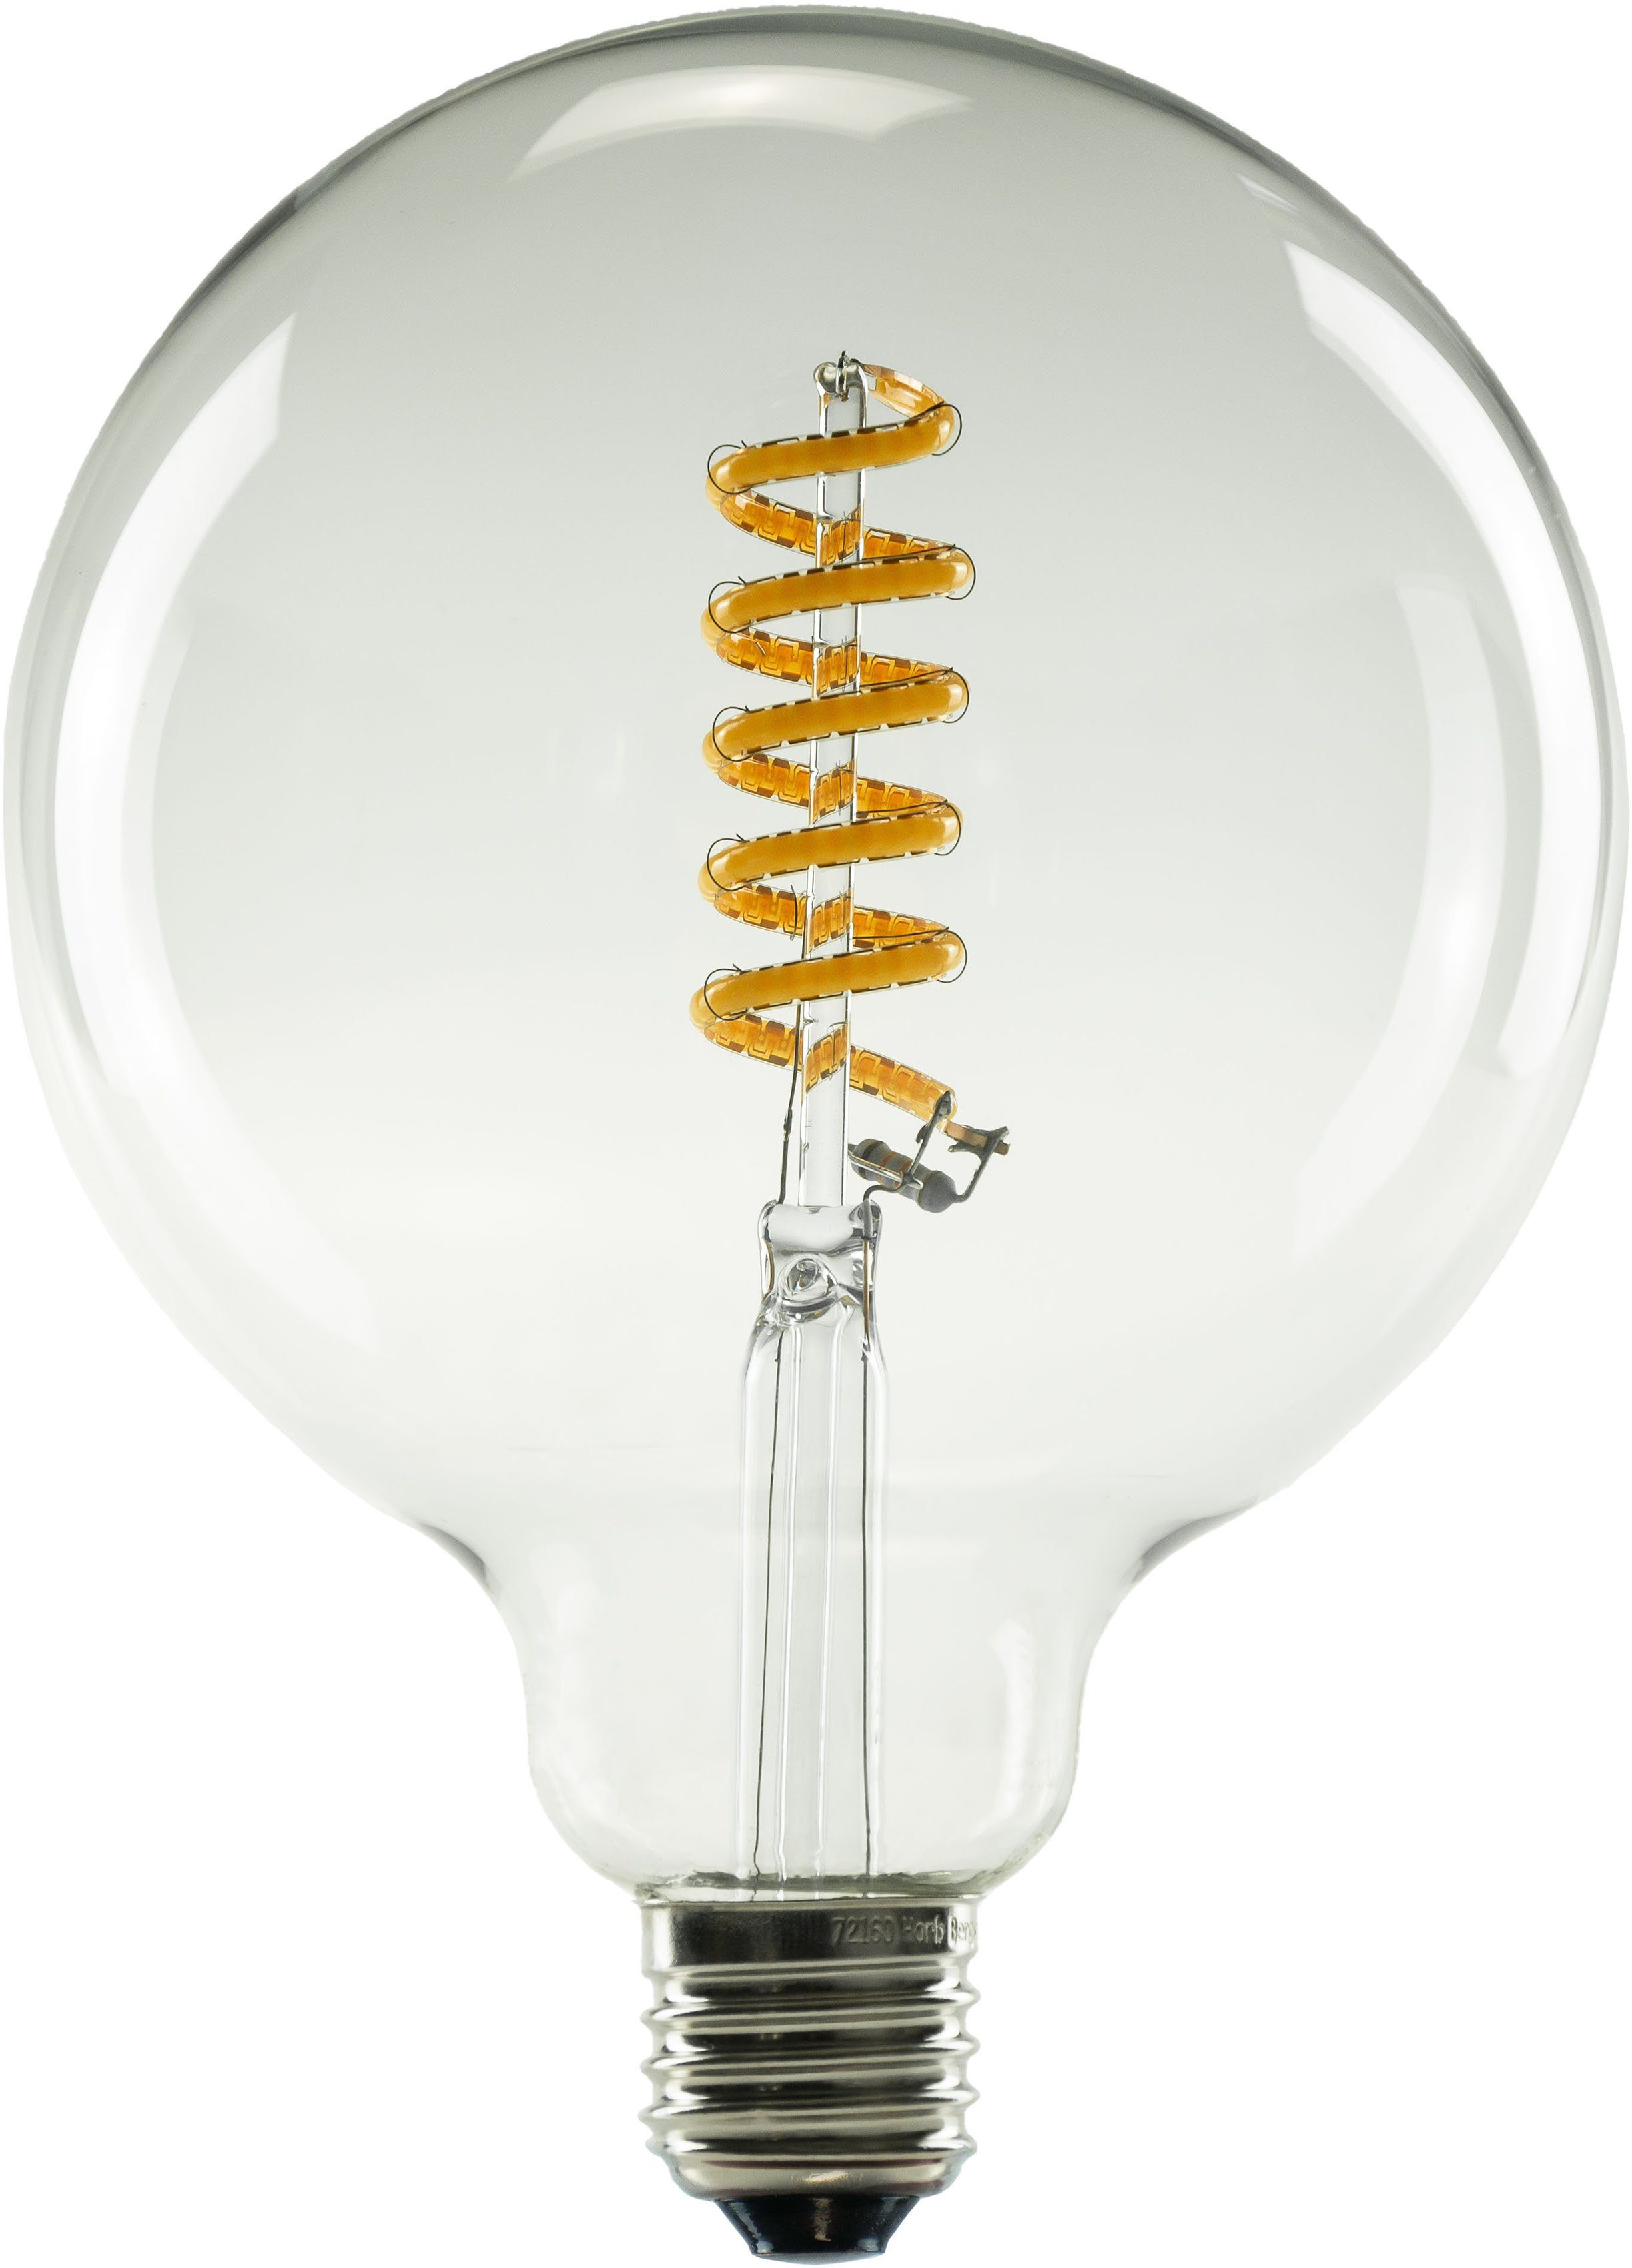 SEGULA LED-Leuchtmittel LED Globe 125 Curved Spirale klar, E27, Warmweiß, dimmbar, E27, Globe 125 Curved Spirale klar, Ambient Dimming